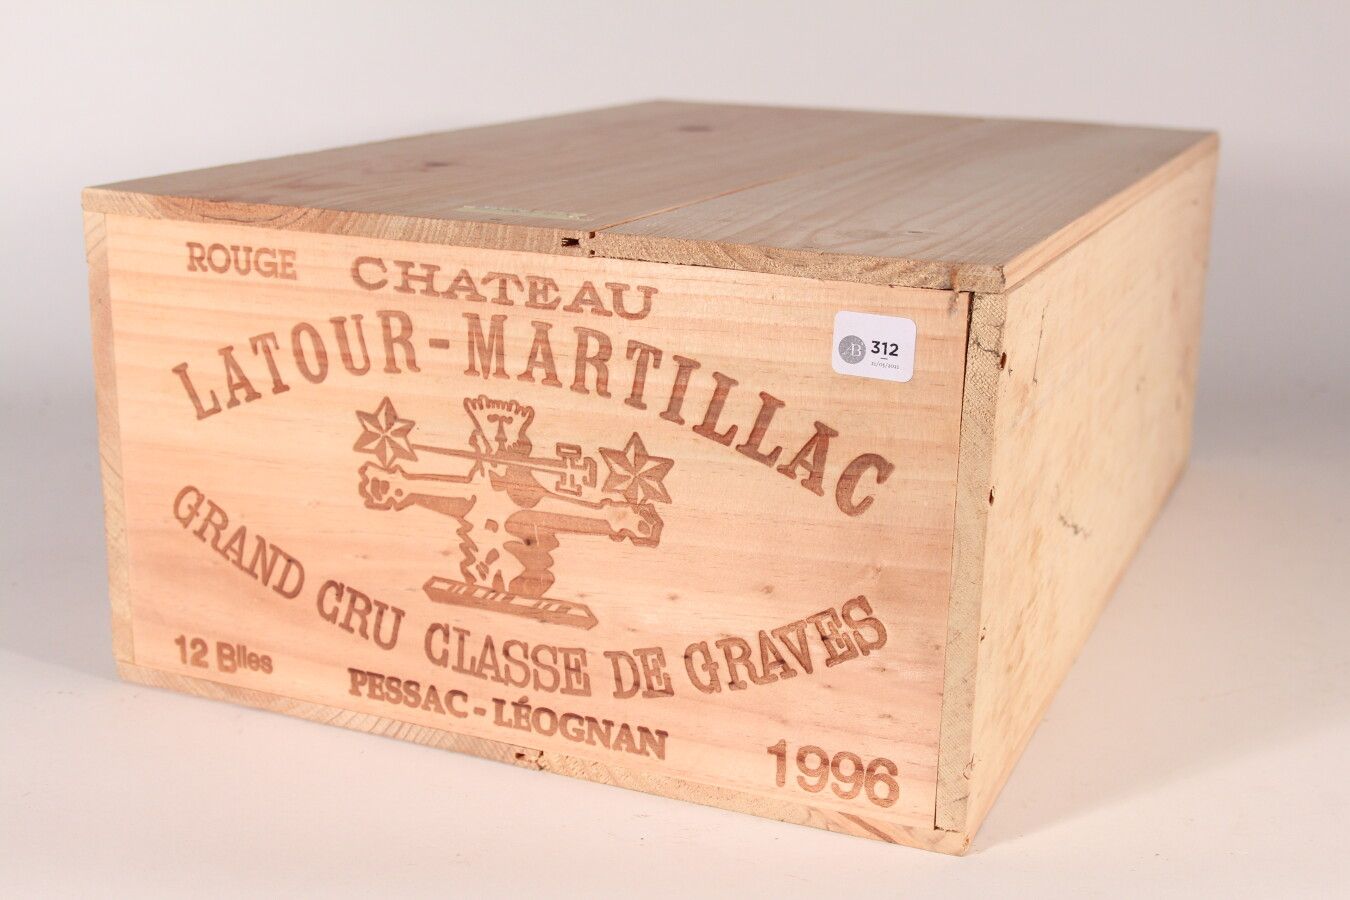 Null 1996 - Château Latour Martillac

Pessac-Léognan - 12 blles